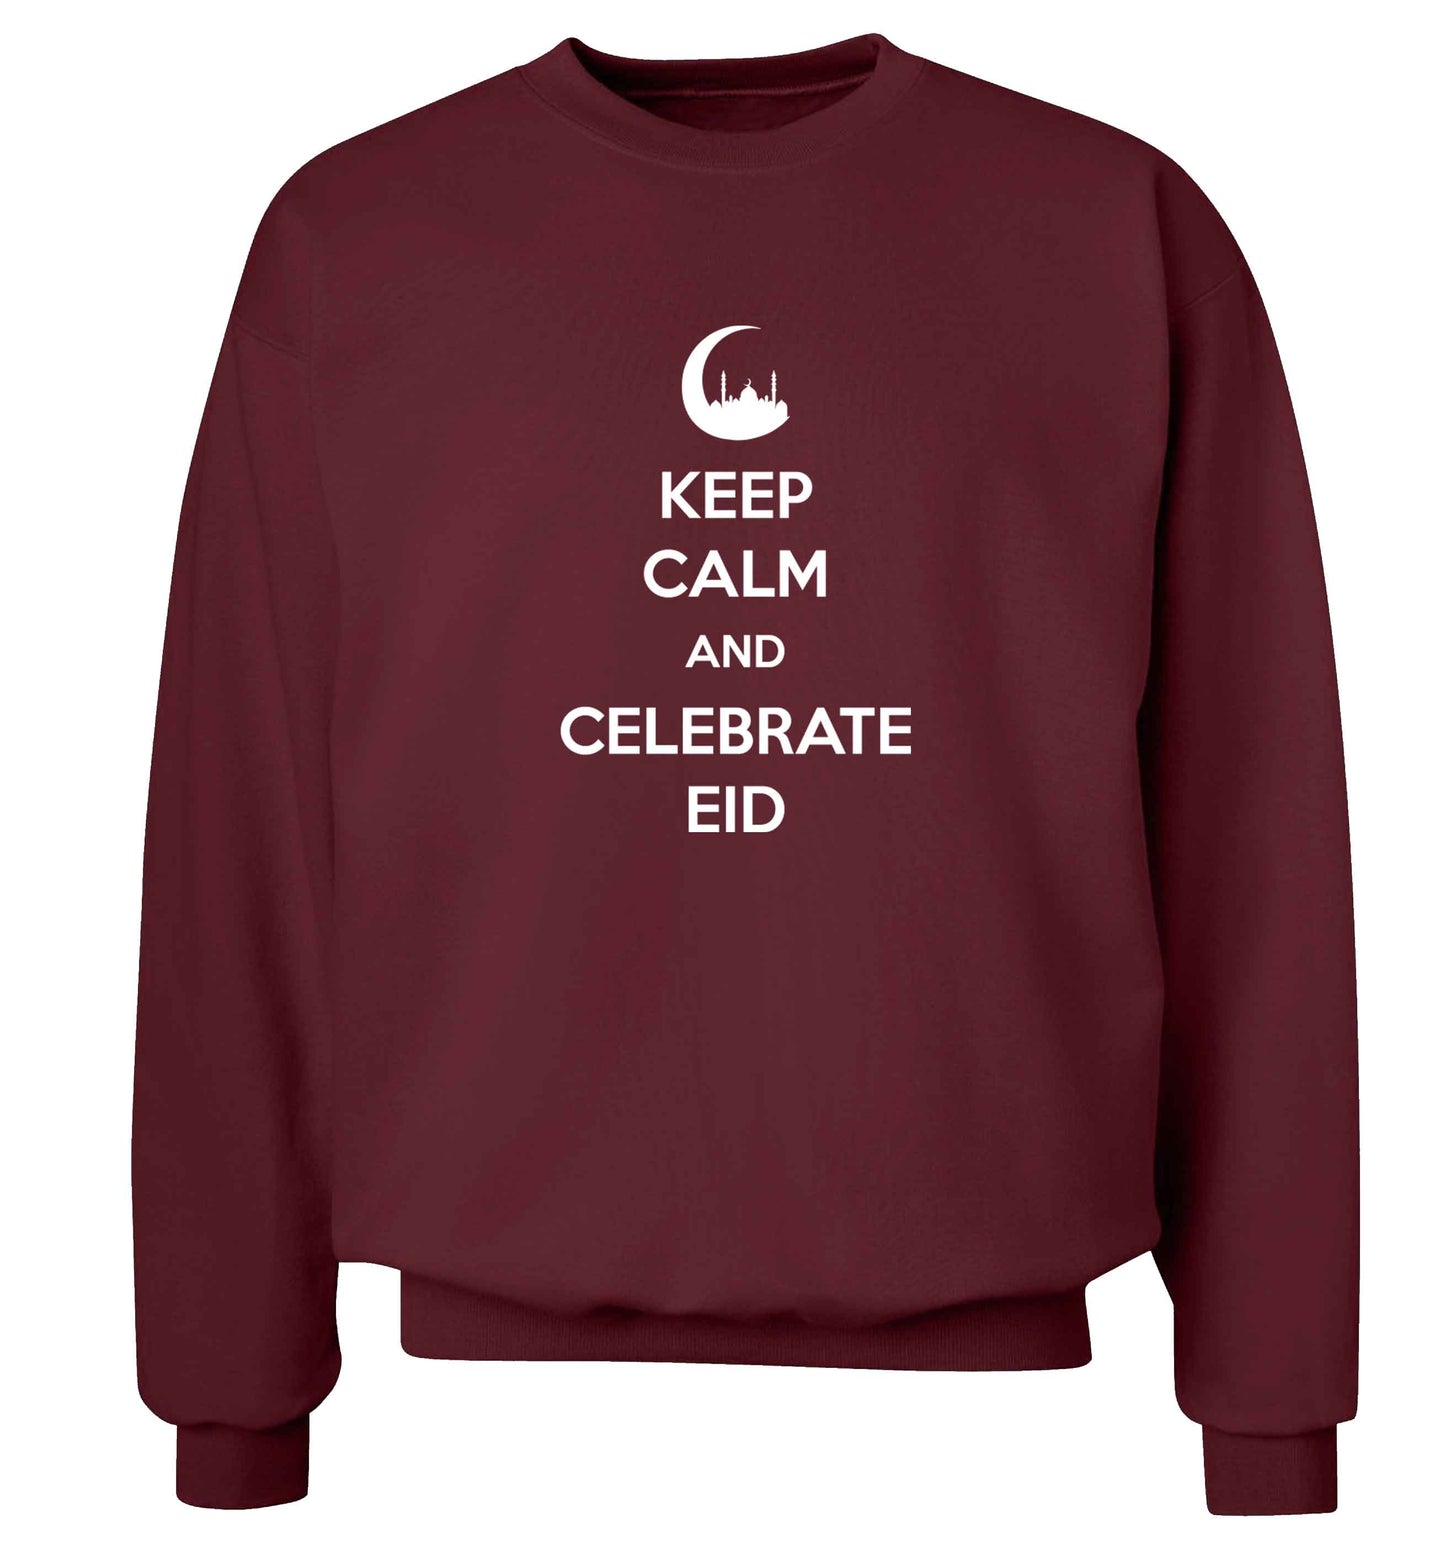 Keep calm and celebrate Eid adult's unisex maroon sweater 2XL